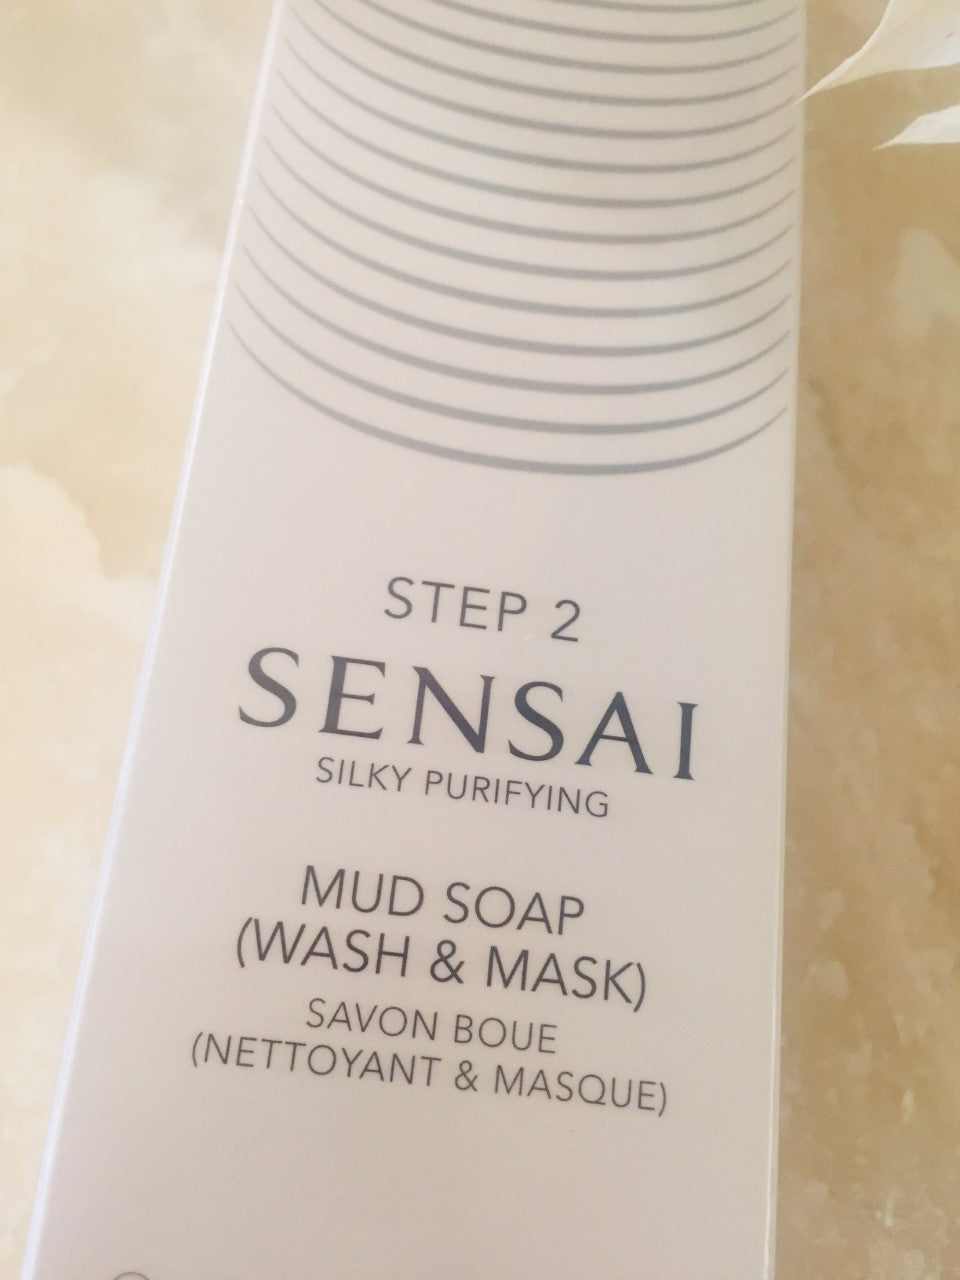 Sensai Mud Soap Step 2 (Wash & Mask)